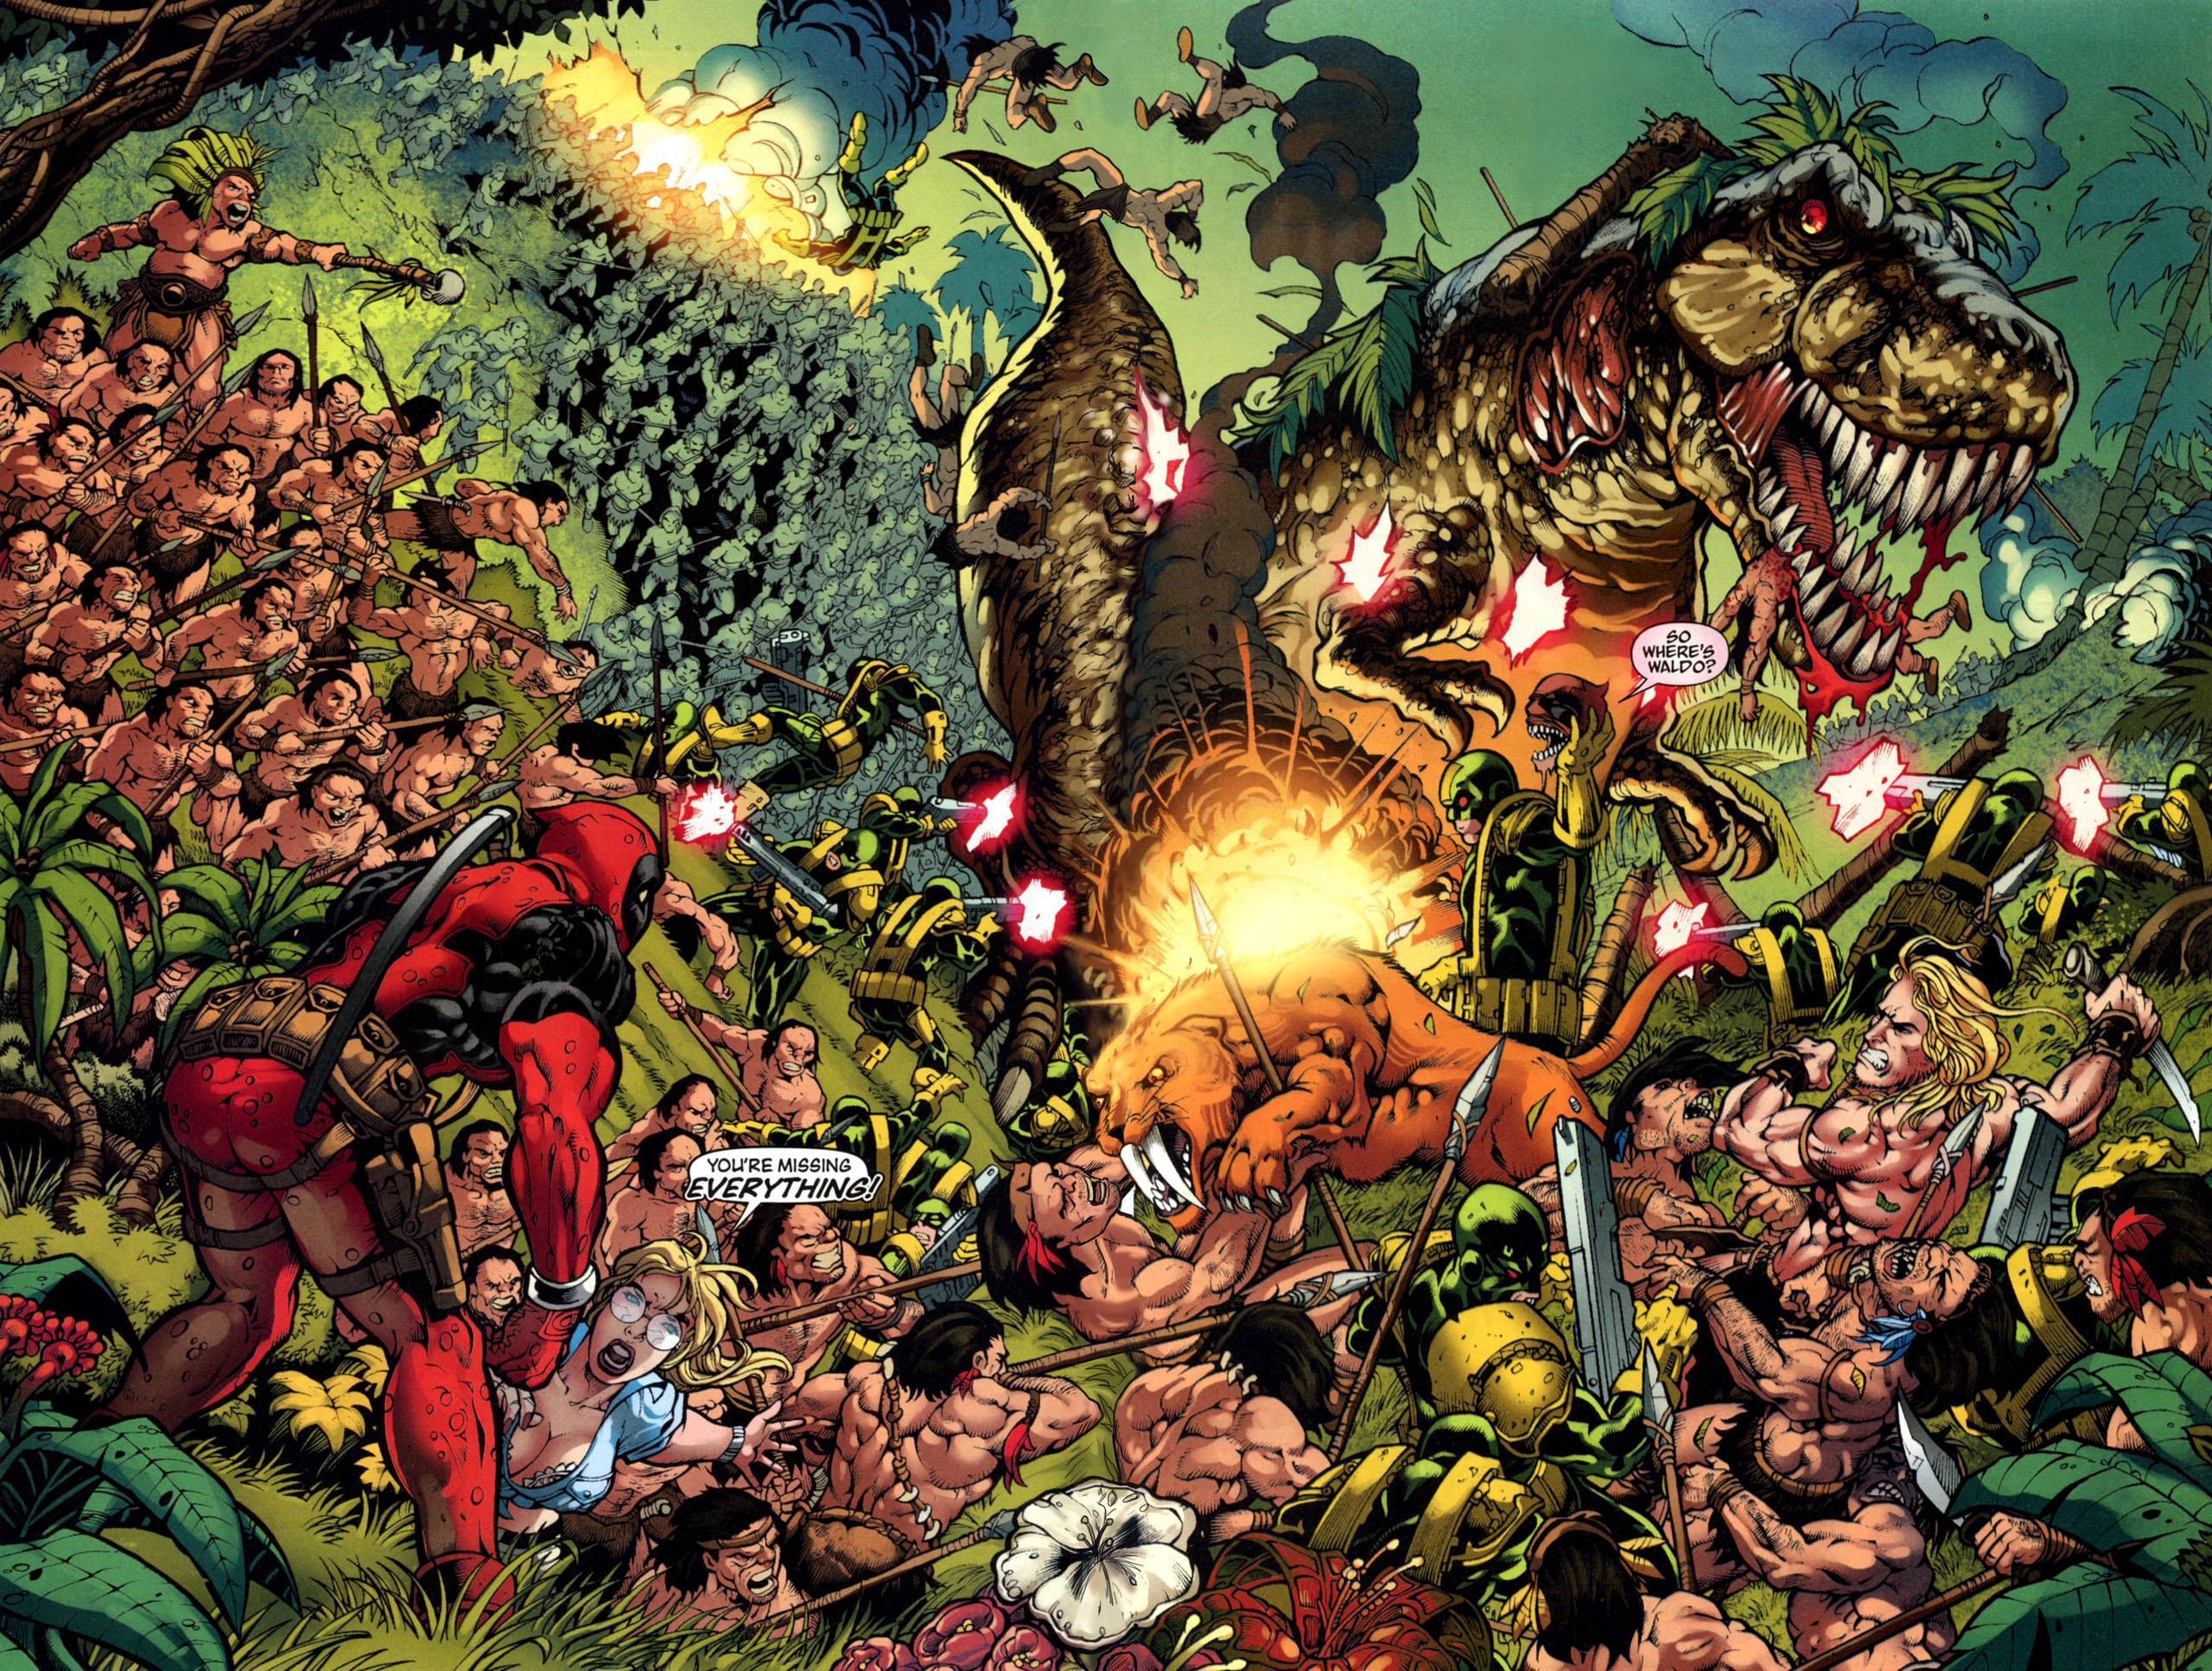 deadpool, Wade, Winston, Wilson, Anti hero, Marvel, Comics, Mercenary Wallpaper